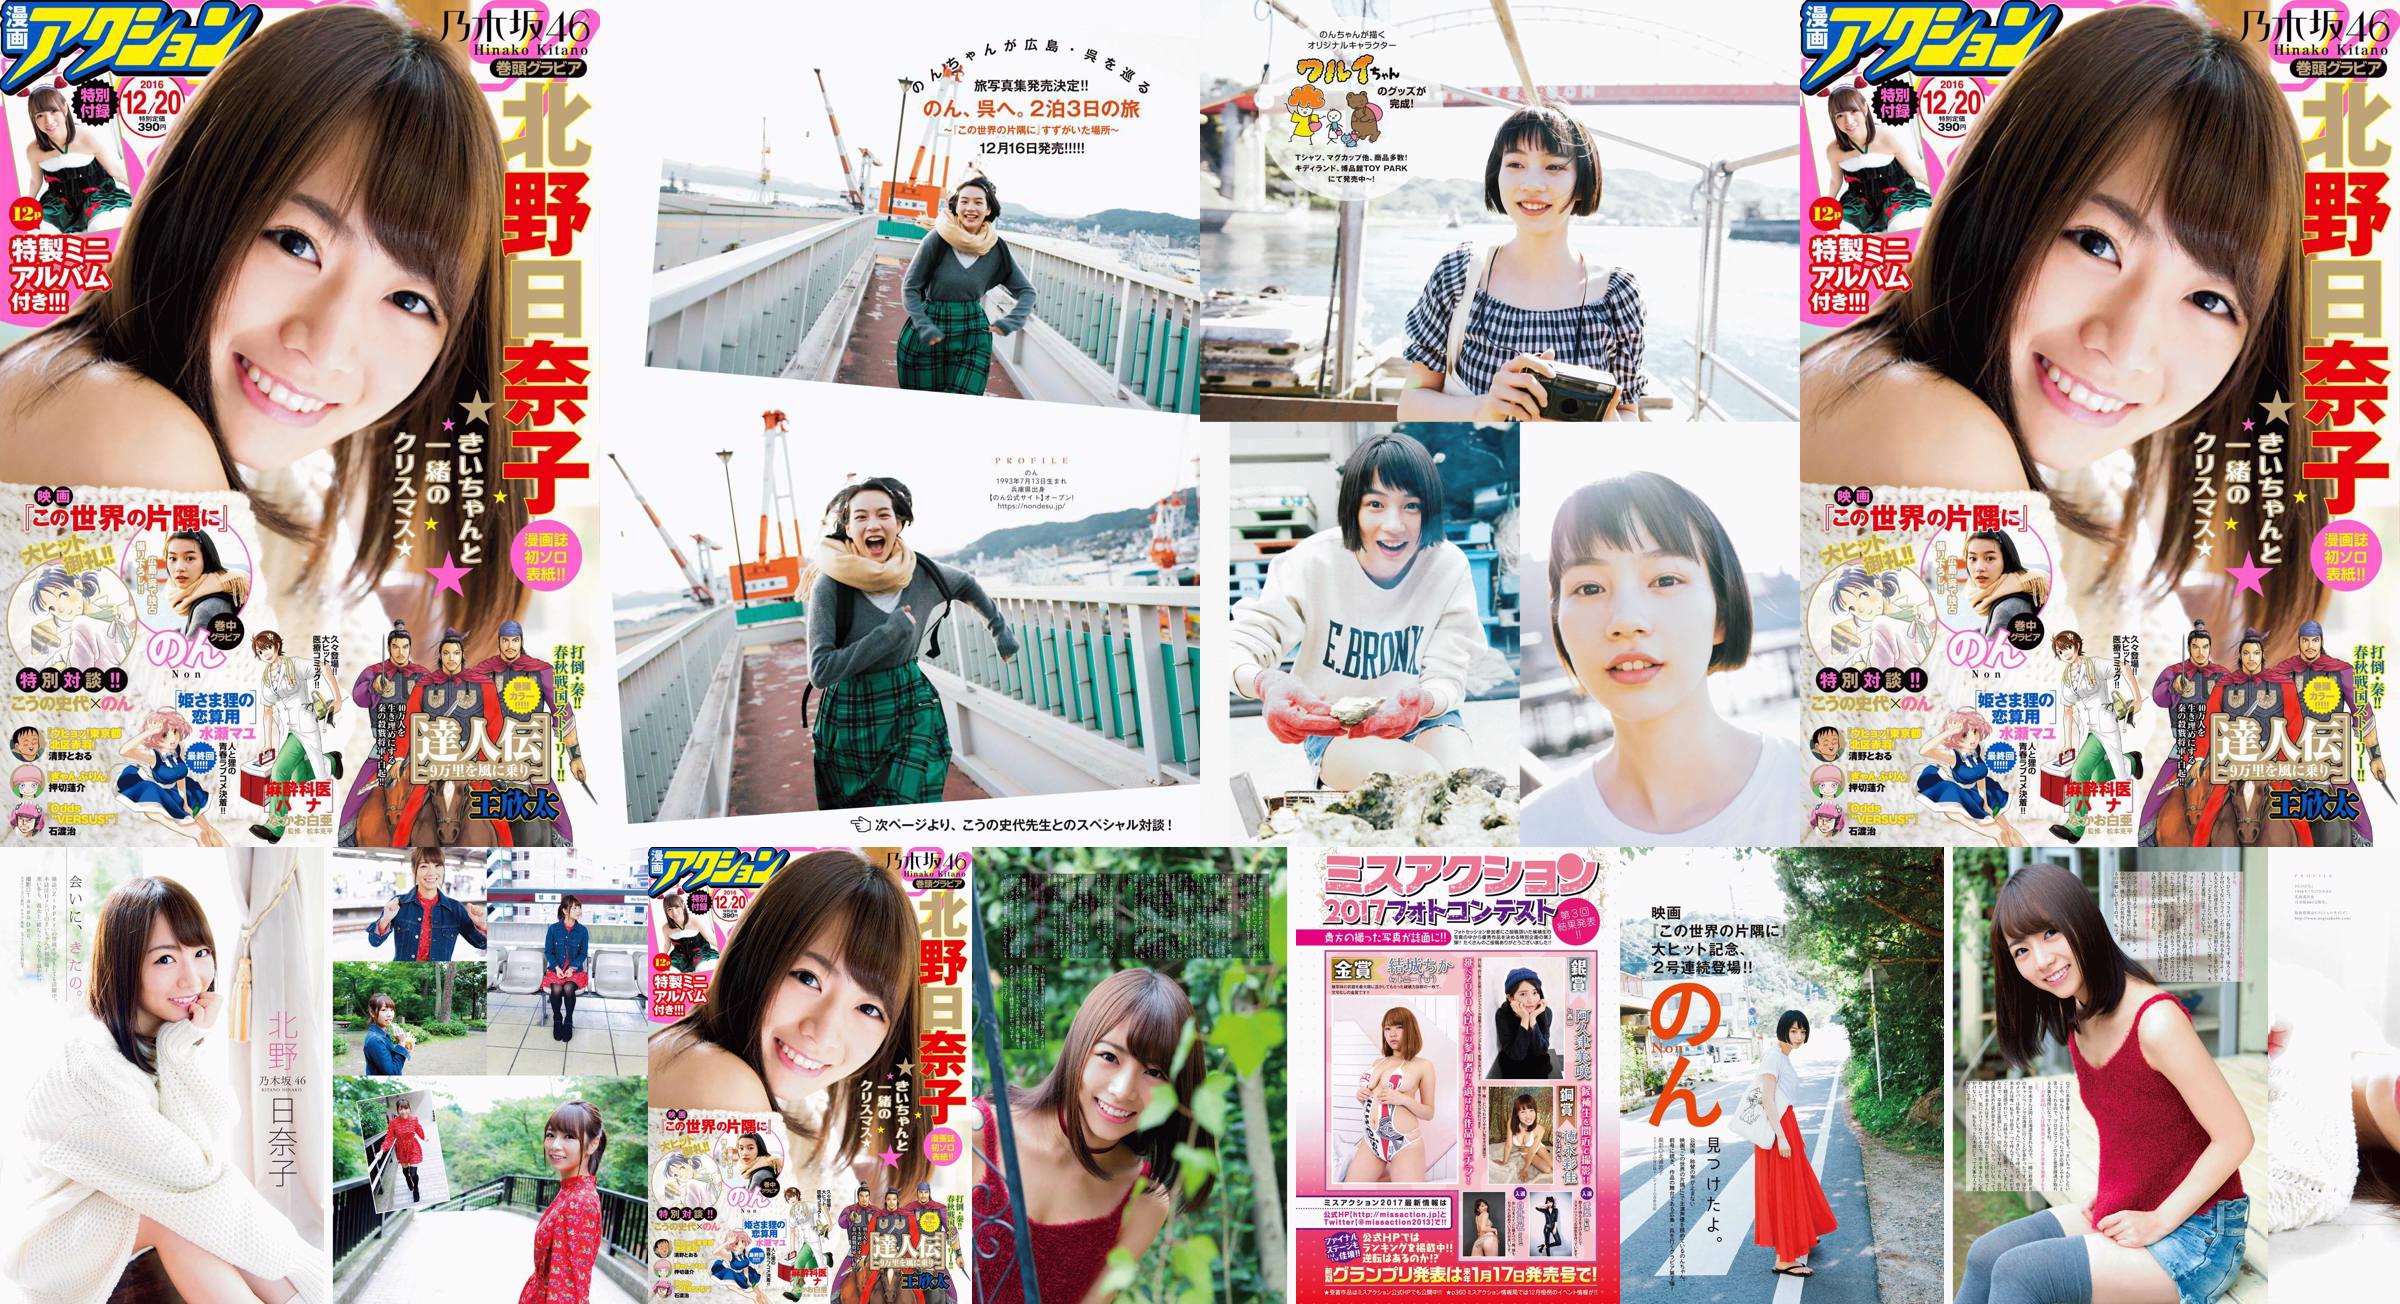 [Manga Action] Kitano Hinako のん 2016 No.24 Photo Magazine No.7b64b4 Pagina 1